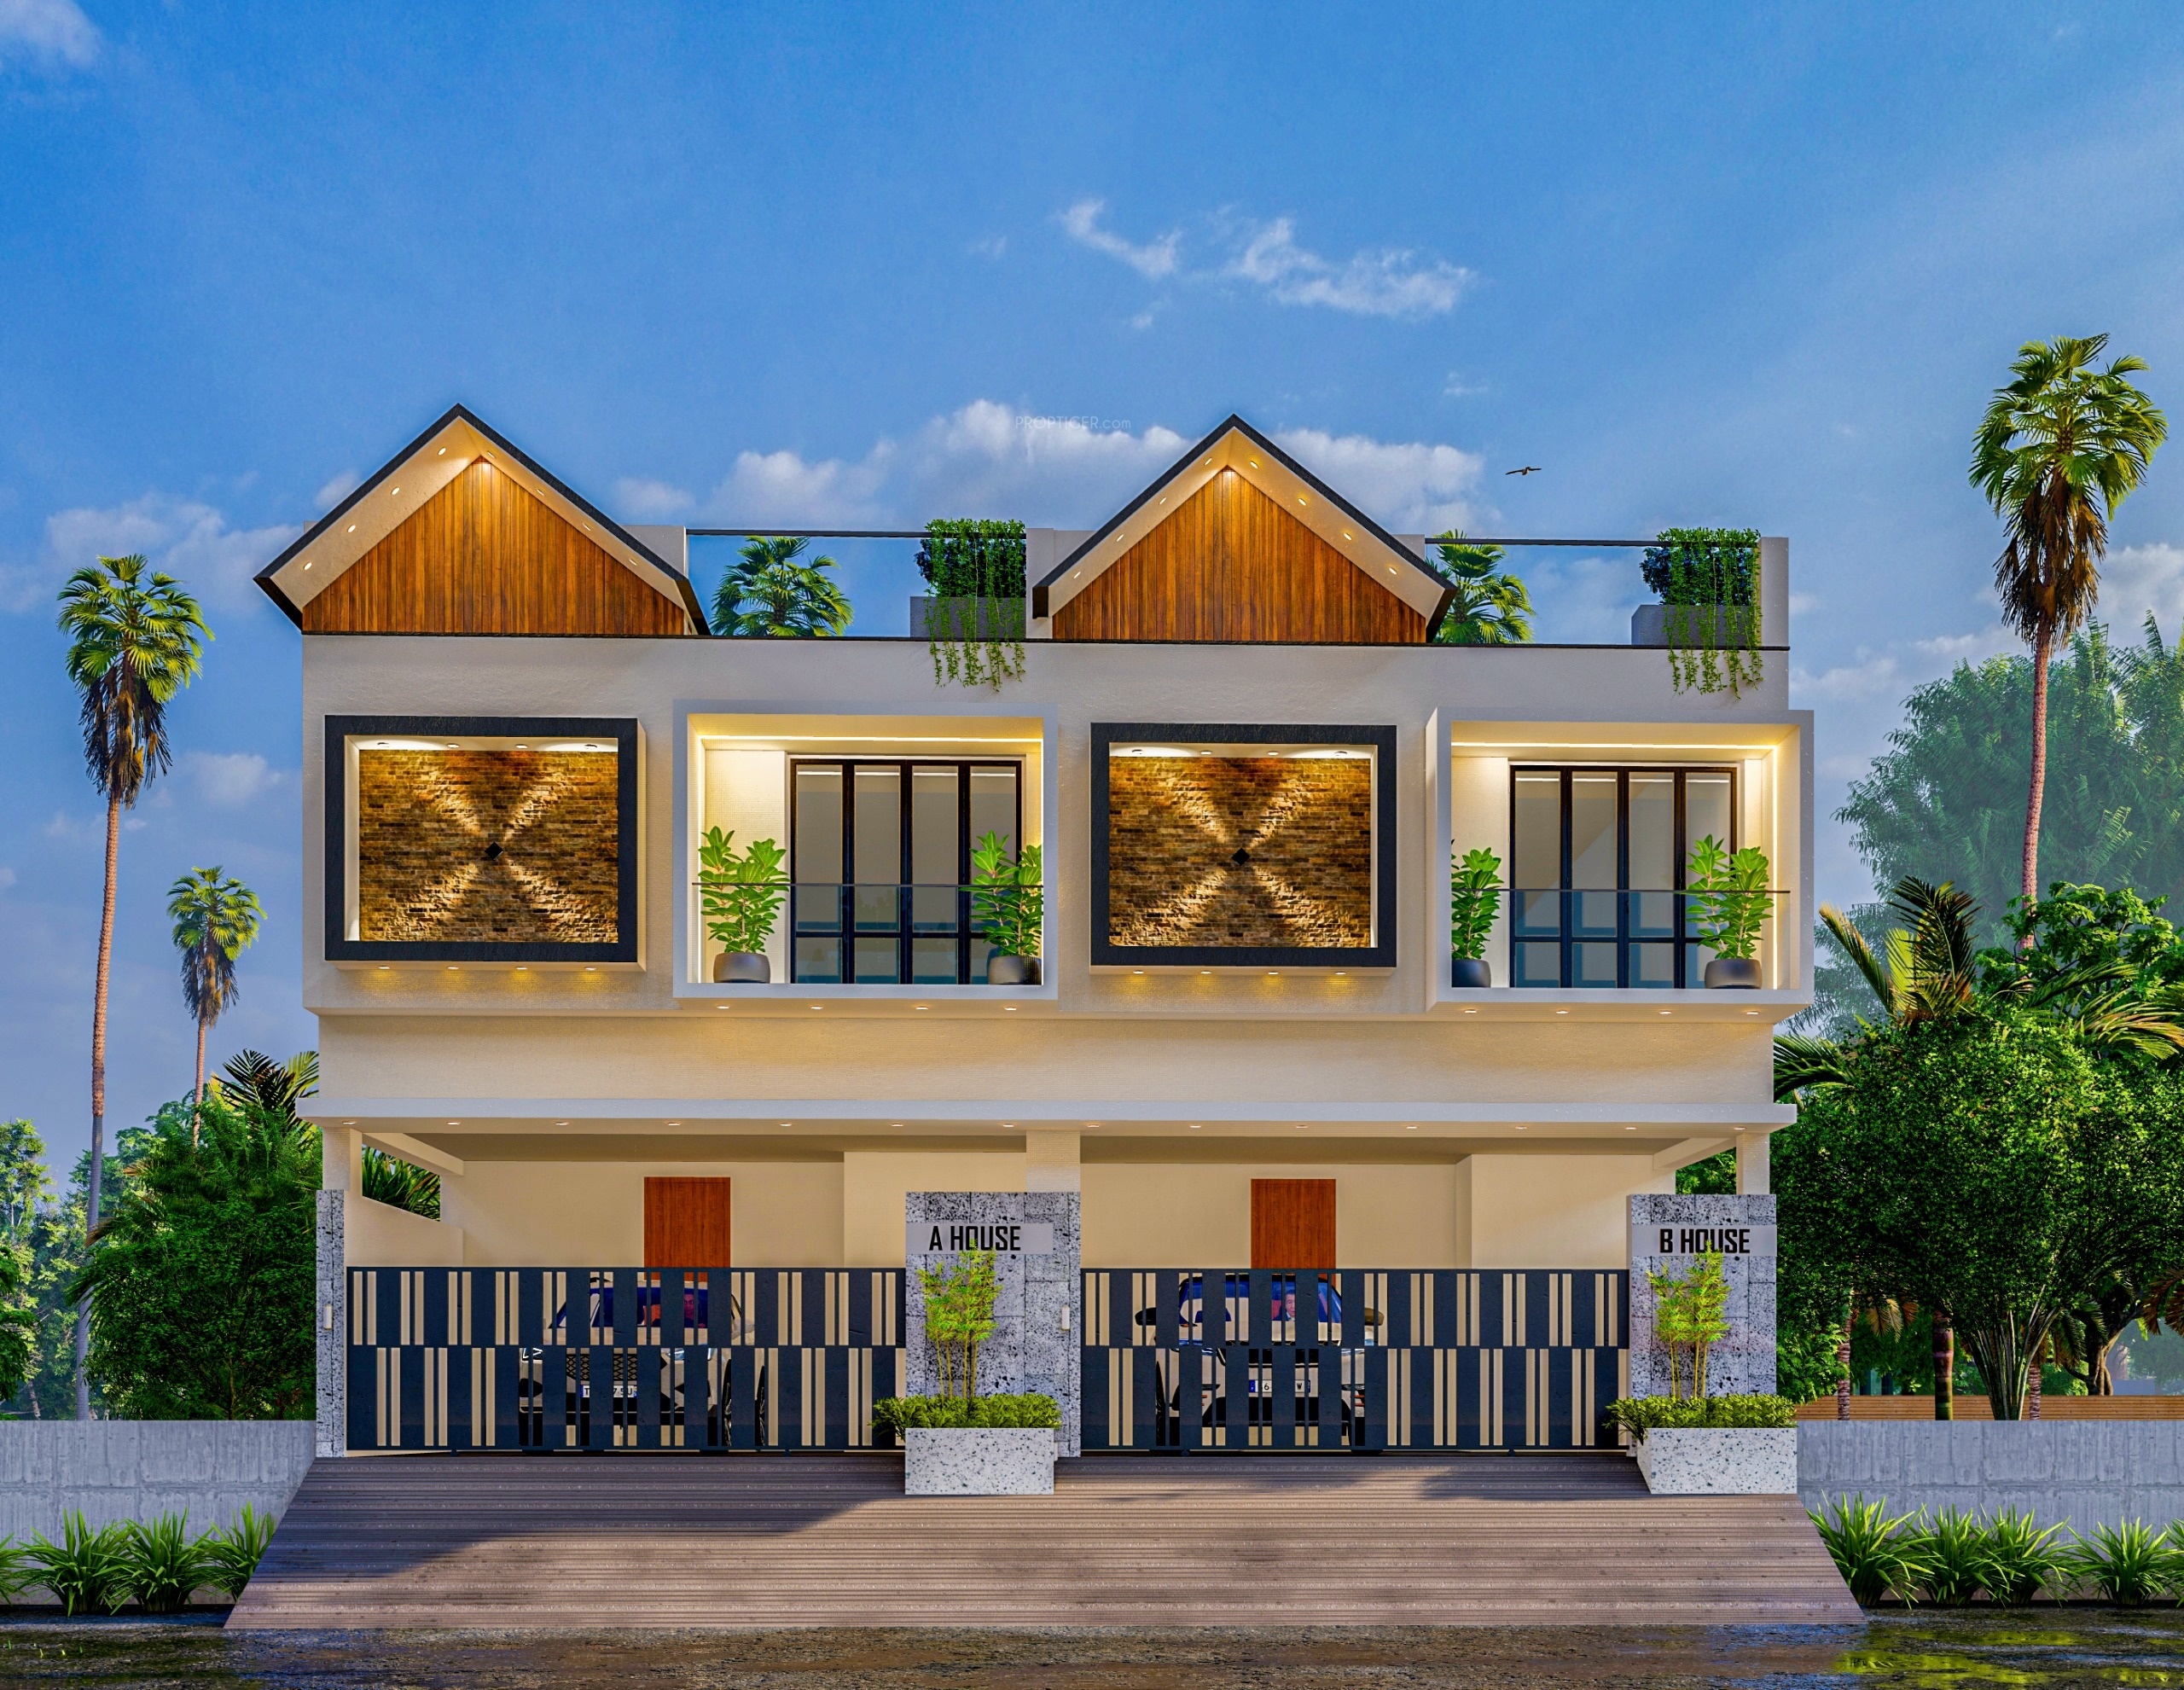 The Dream Big Builderz Villa in Pallikaranai, Chennai